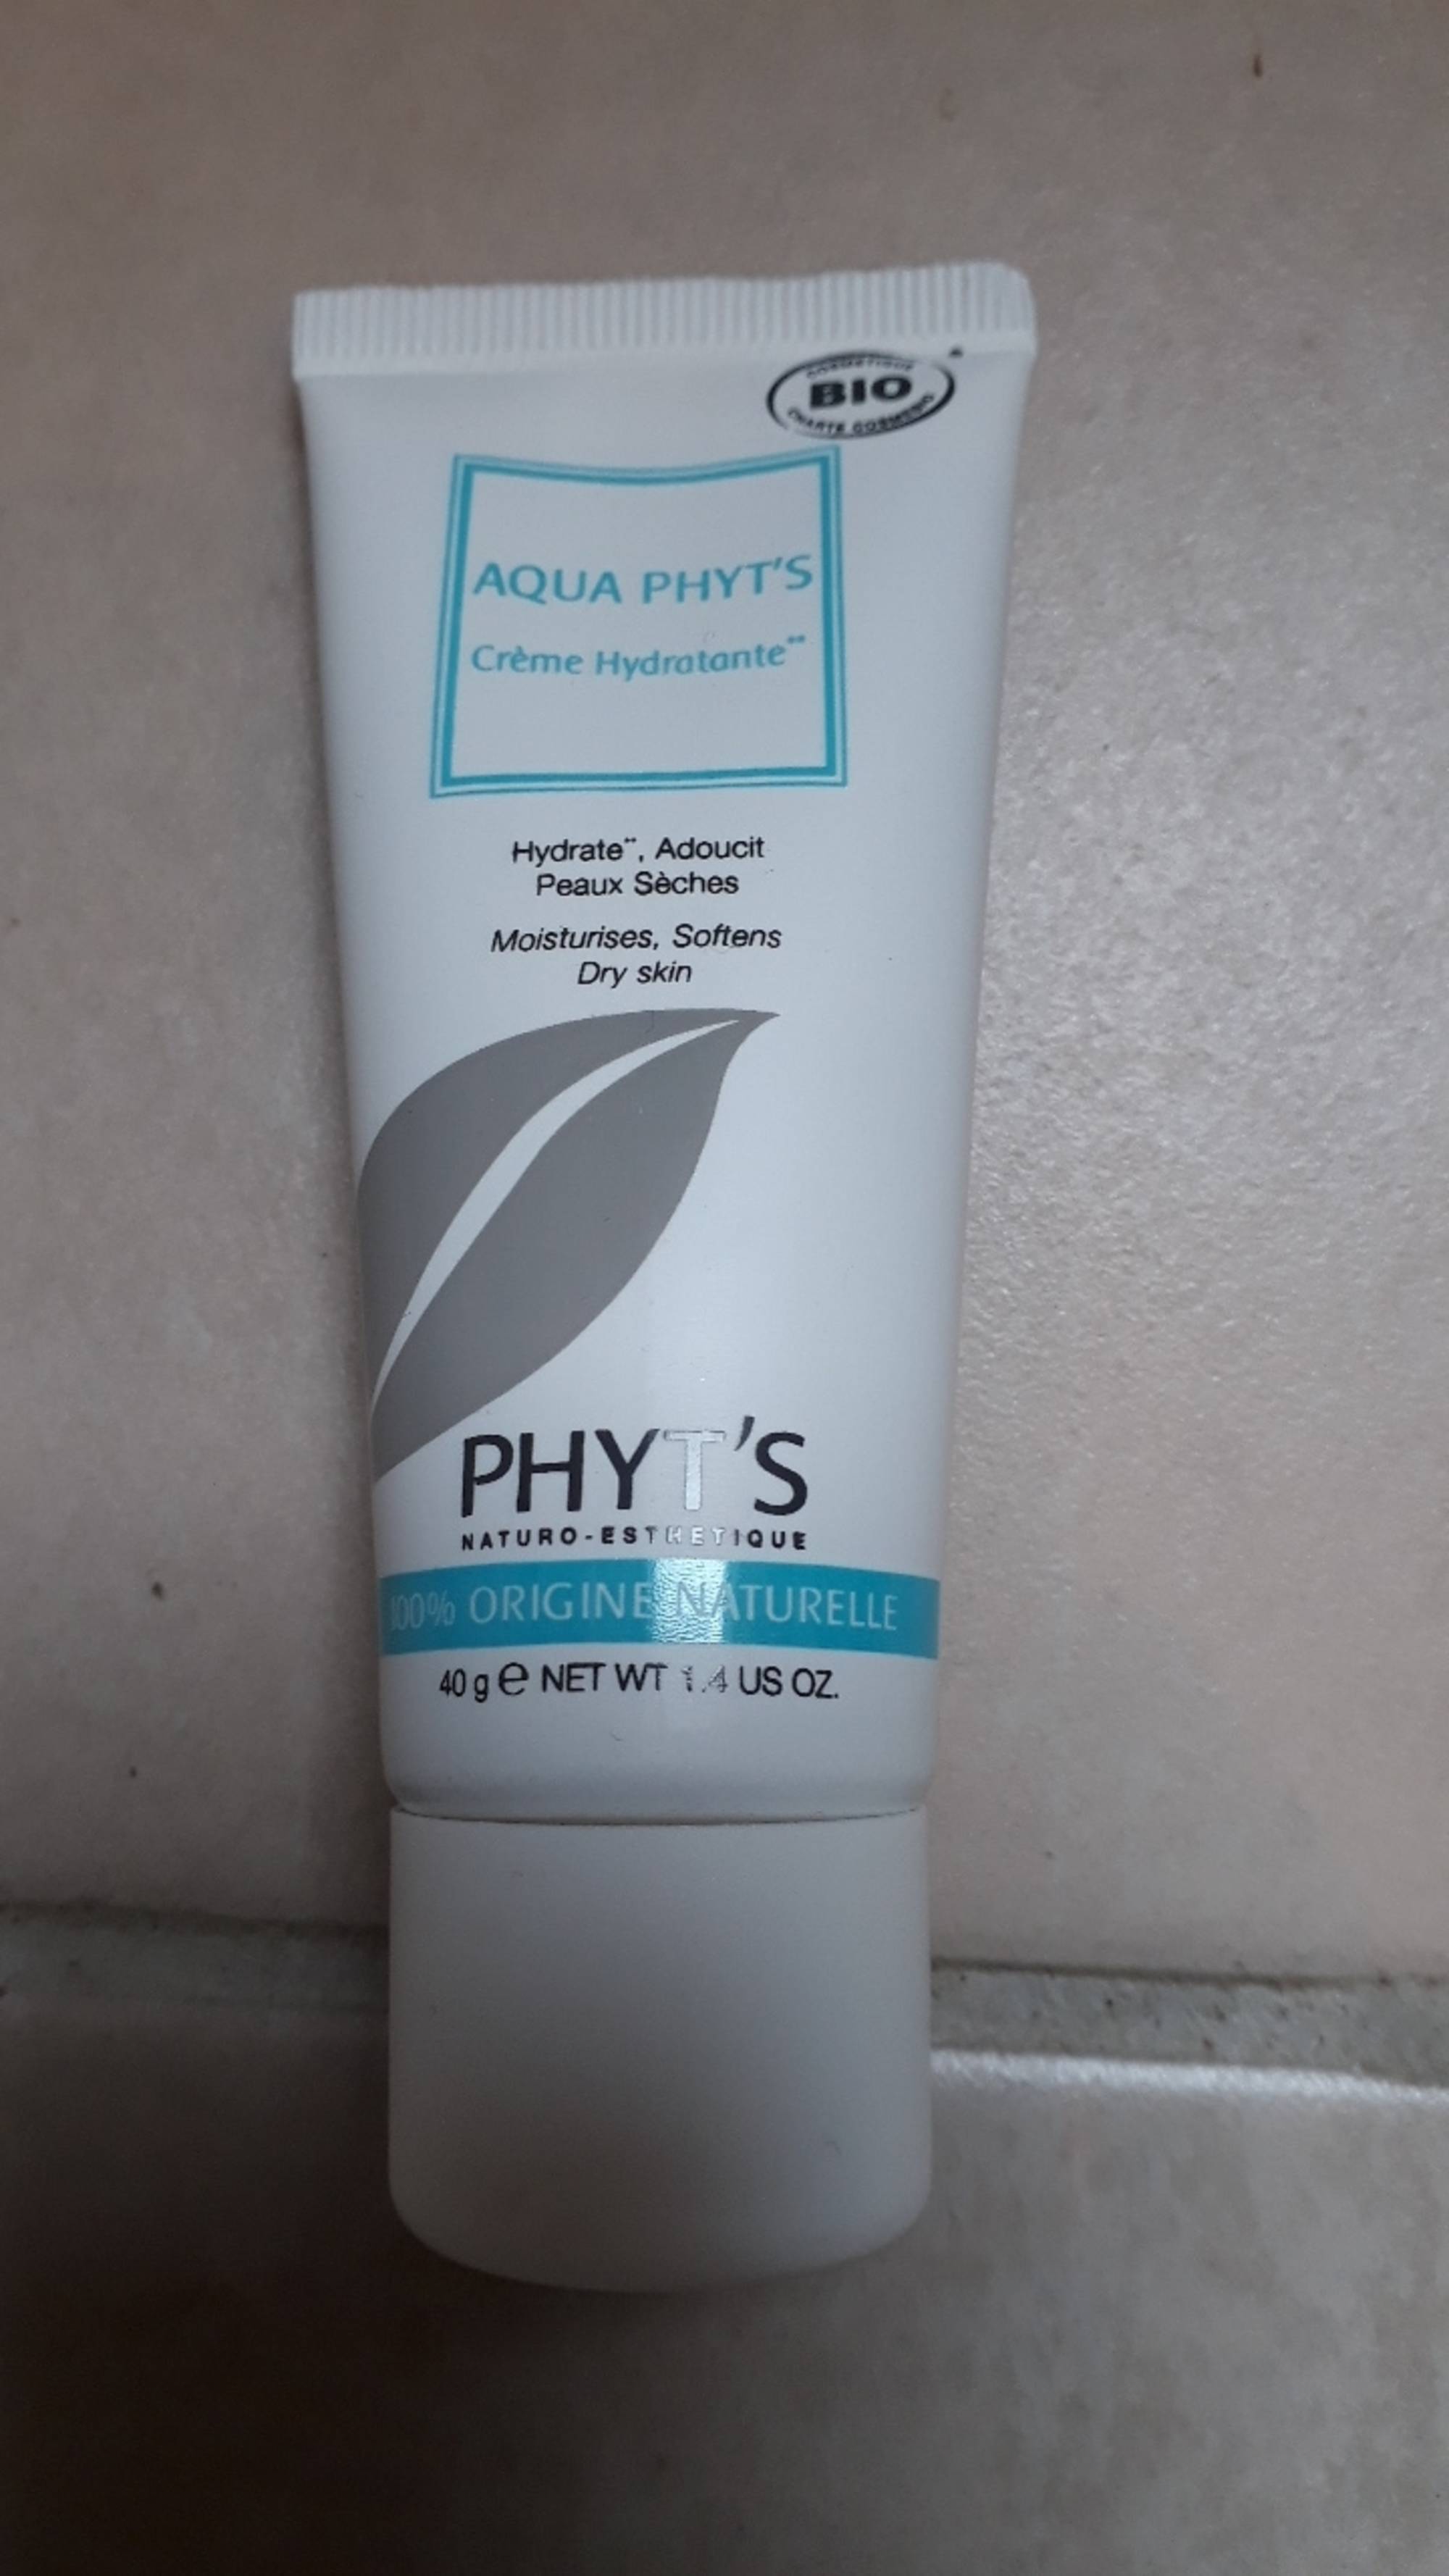 PHYT'S - Aqua phyt's - Crème hydratante